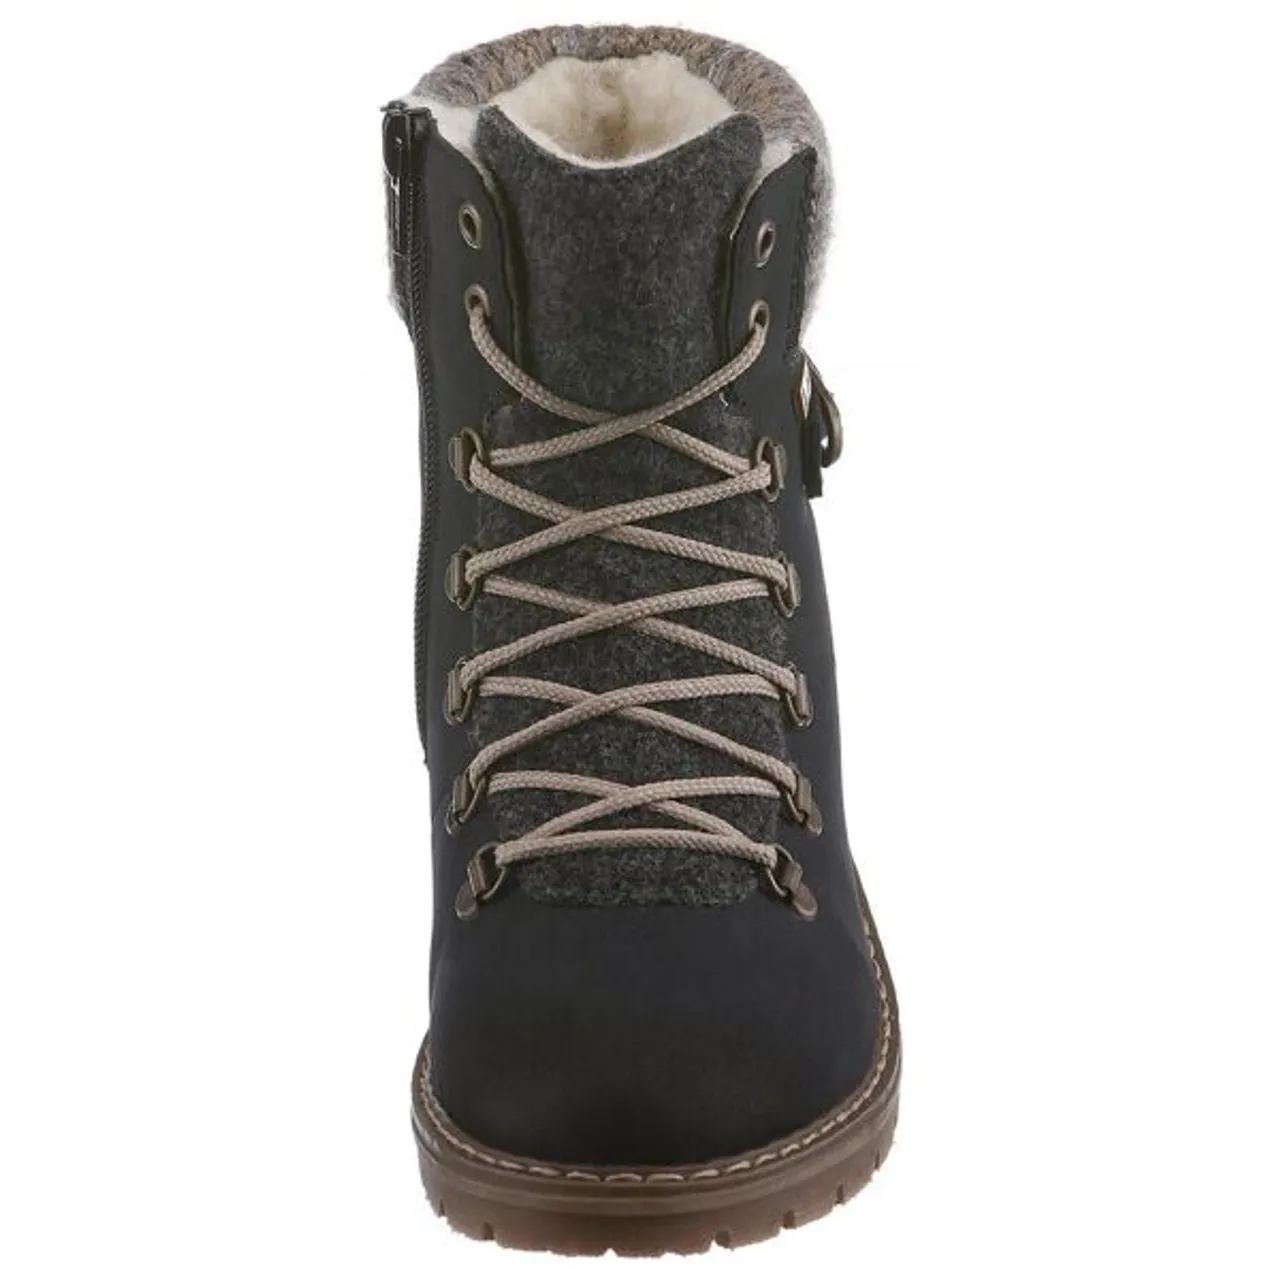 Winterstiefelette RIEKER Gr. 38, grau (nachtblau, grau) Damen Schuhe Reißverschlussstiefeletten